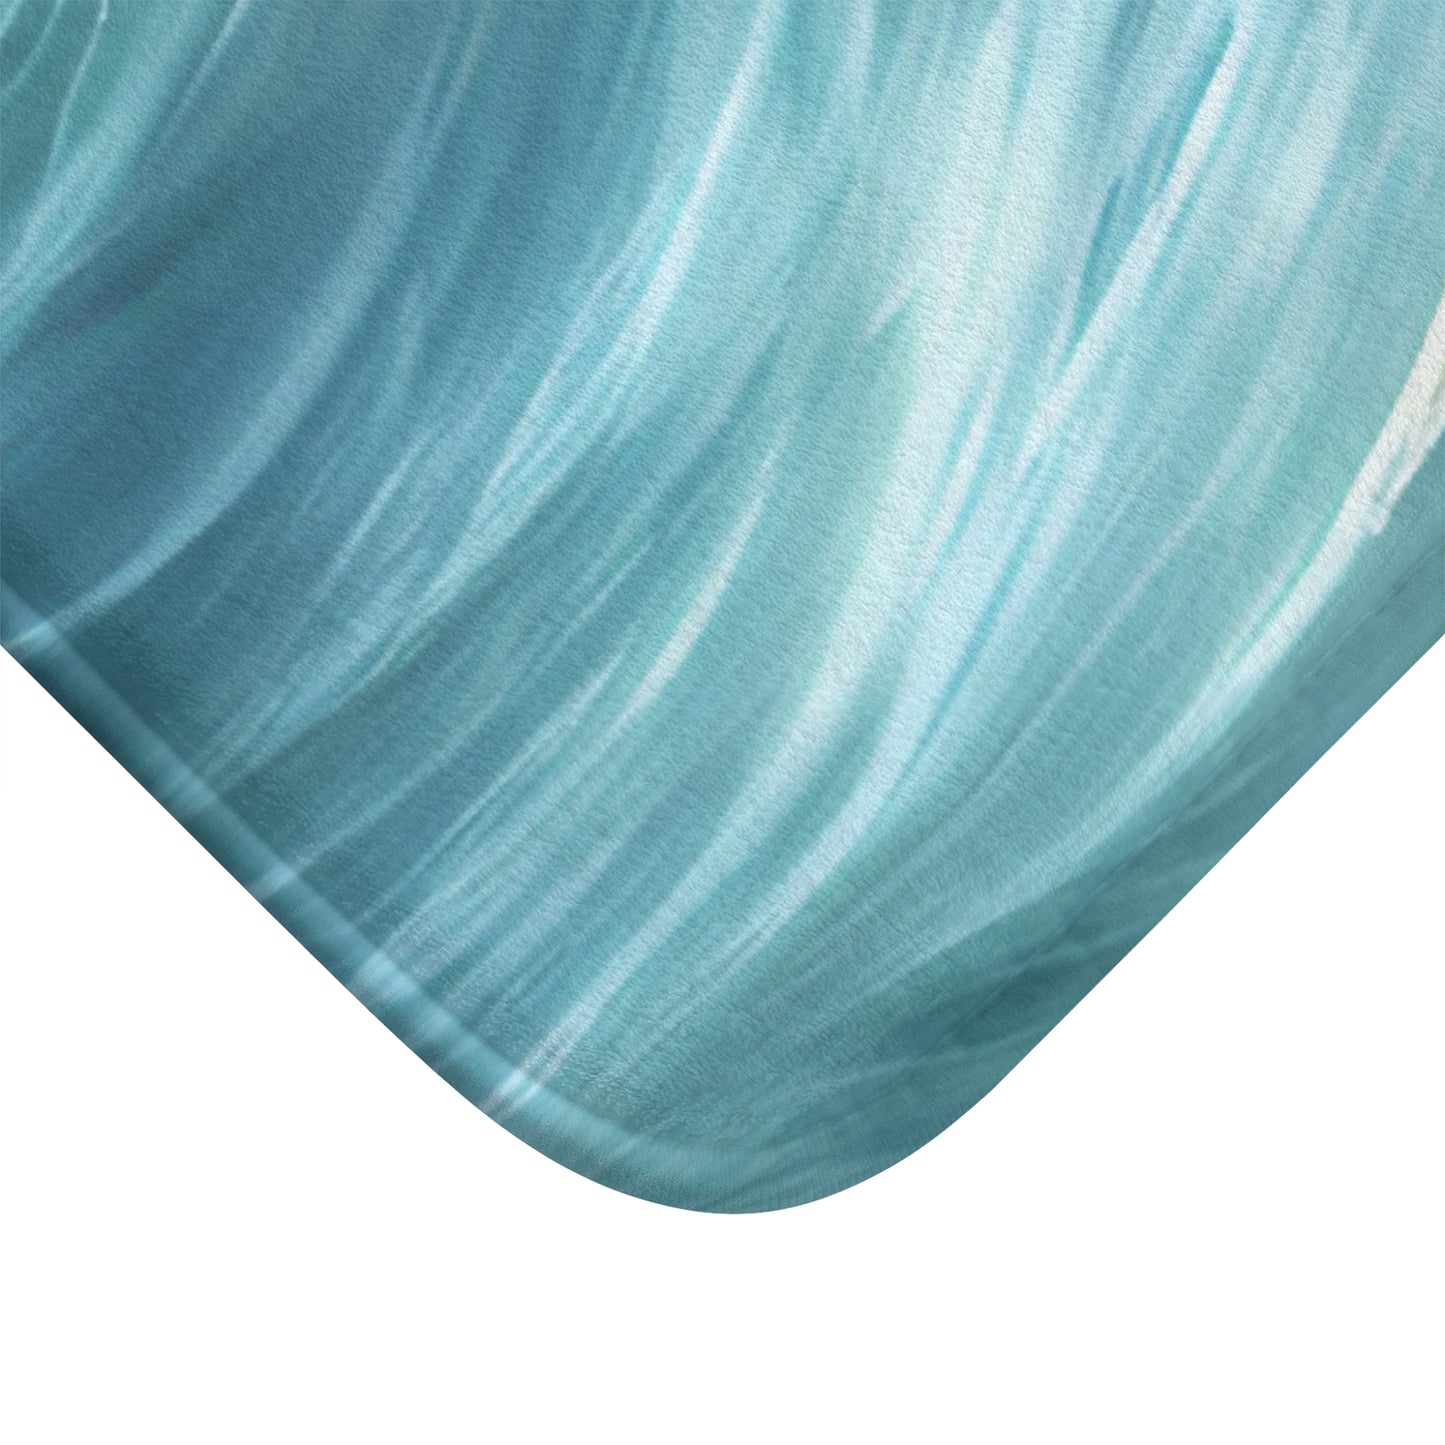 Ocean Seashells Bath Mat 100% Microfiber, Anti-Slip Backing